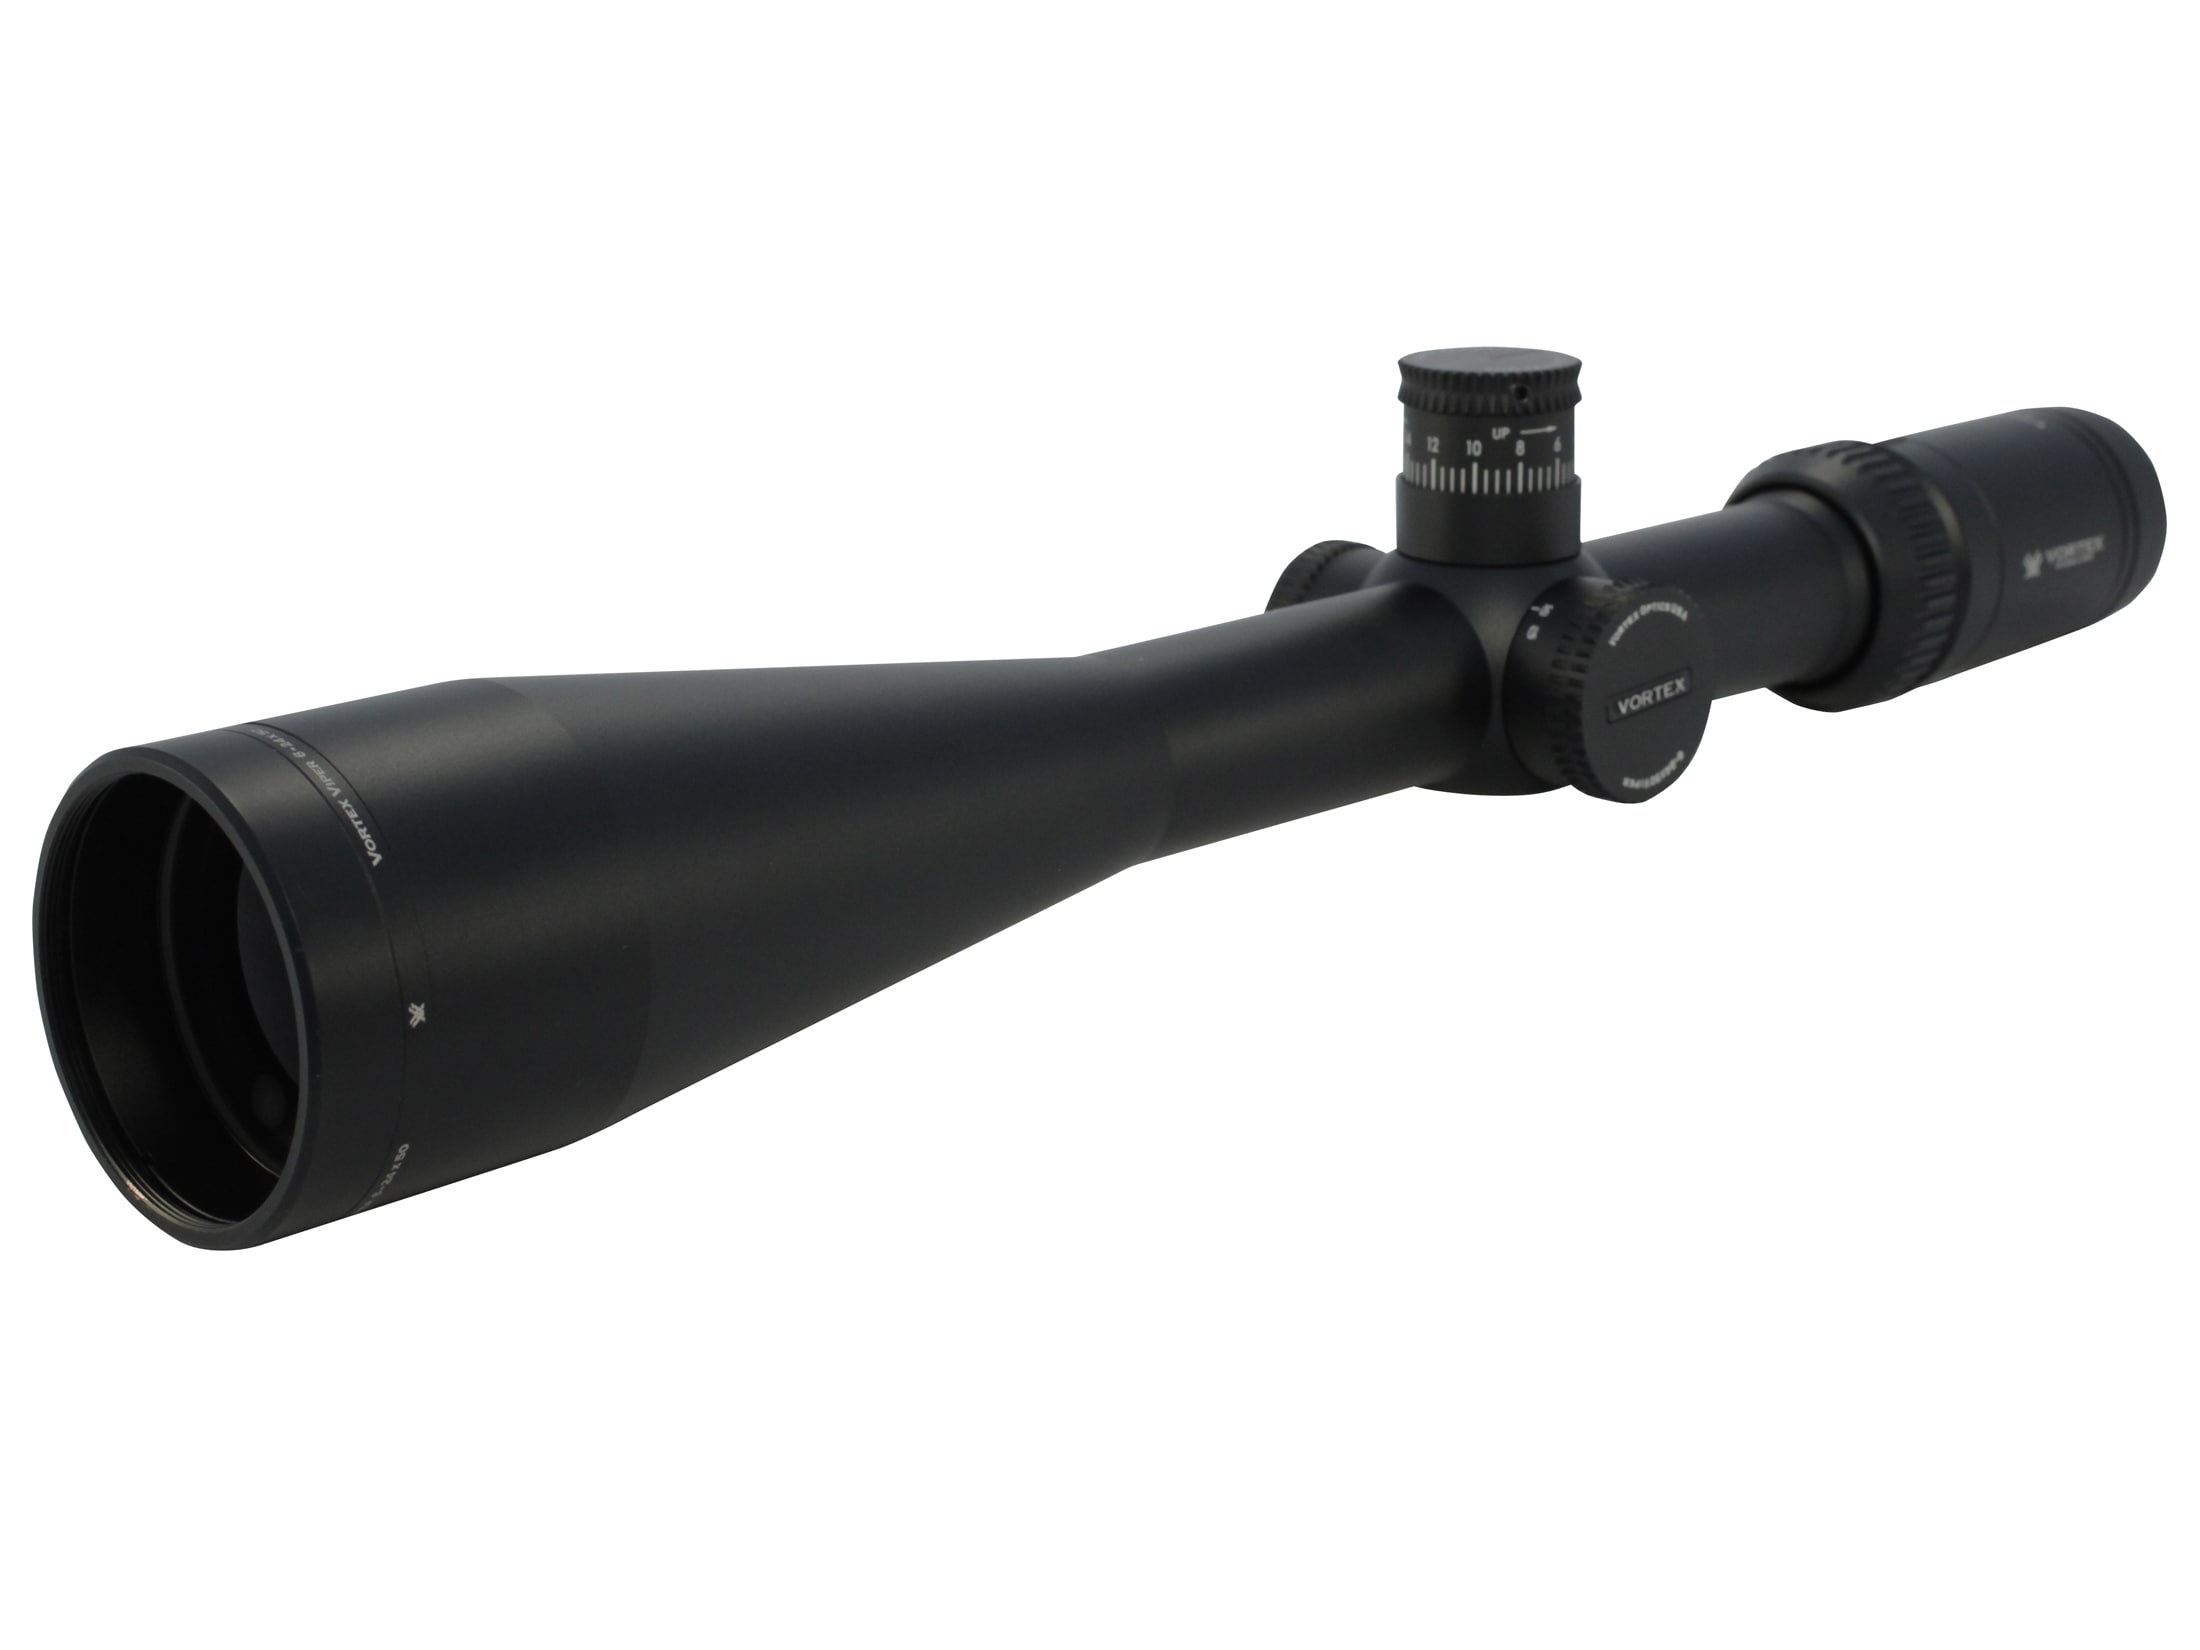 Vortex Optics Viper Hs-t Second Focal Plane Riflescopes for sale online 